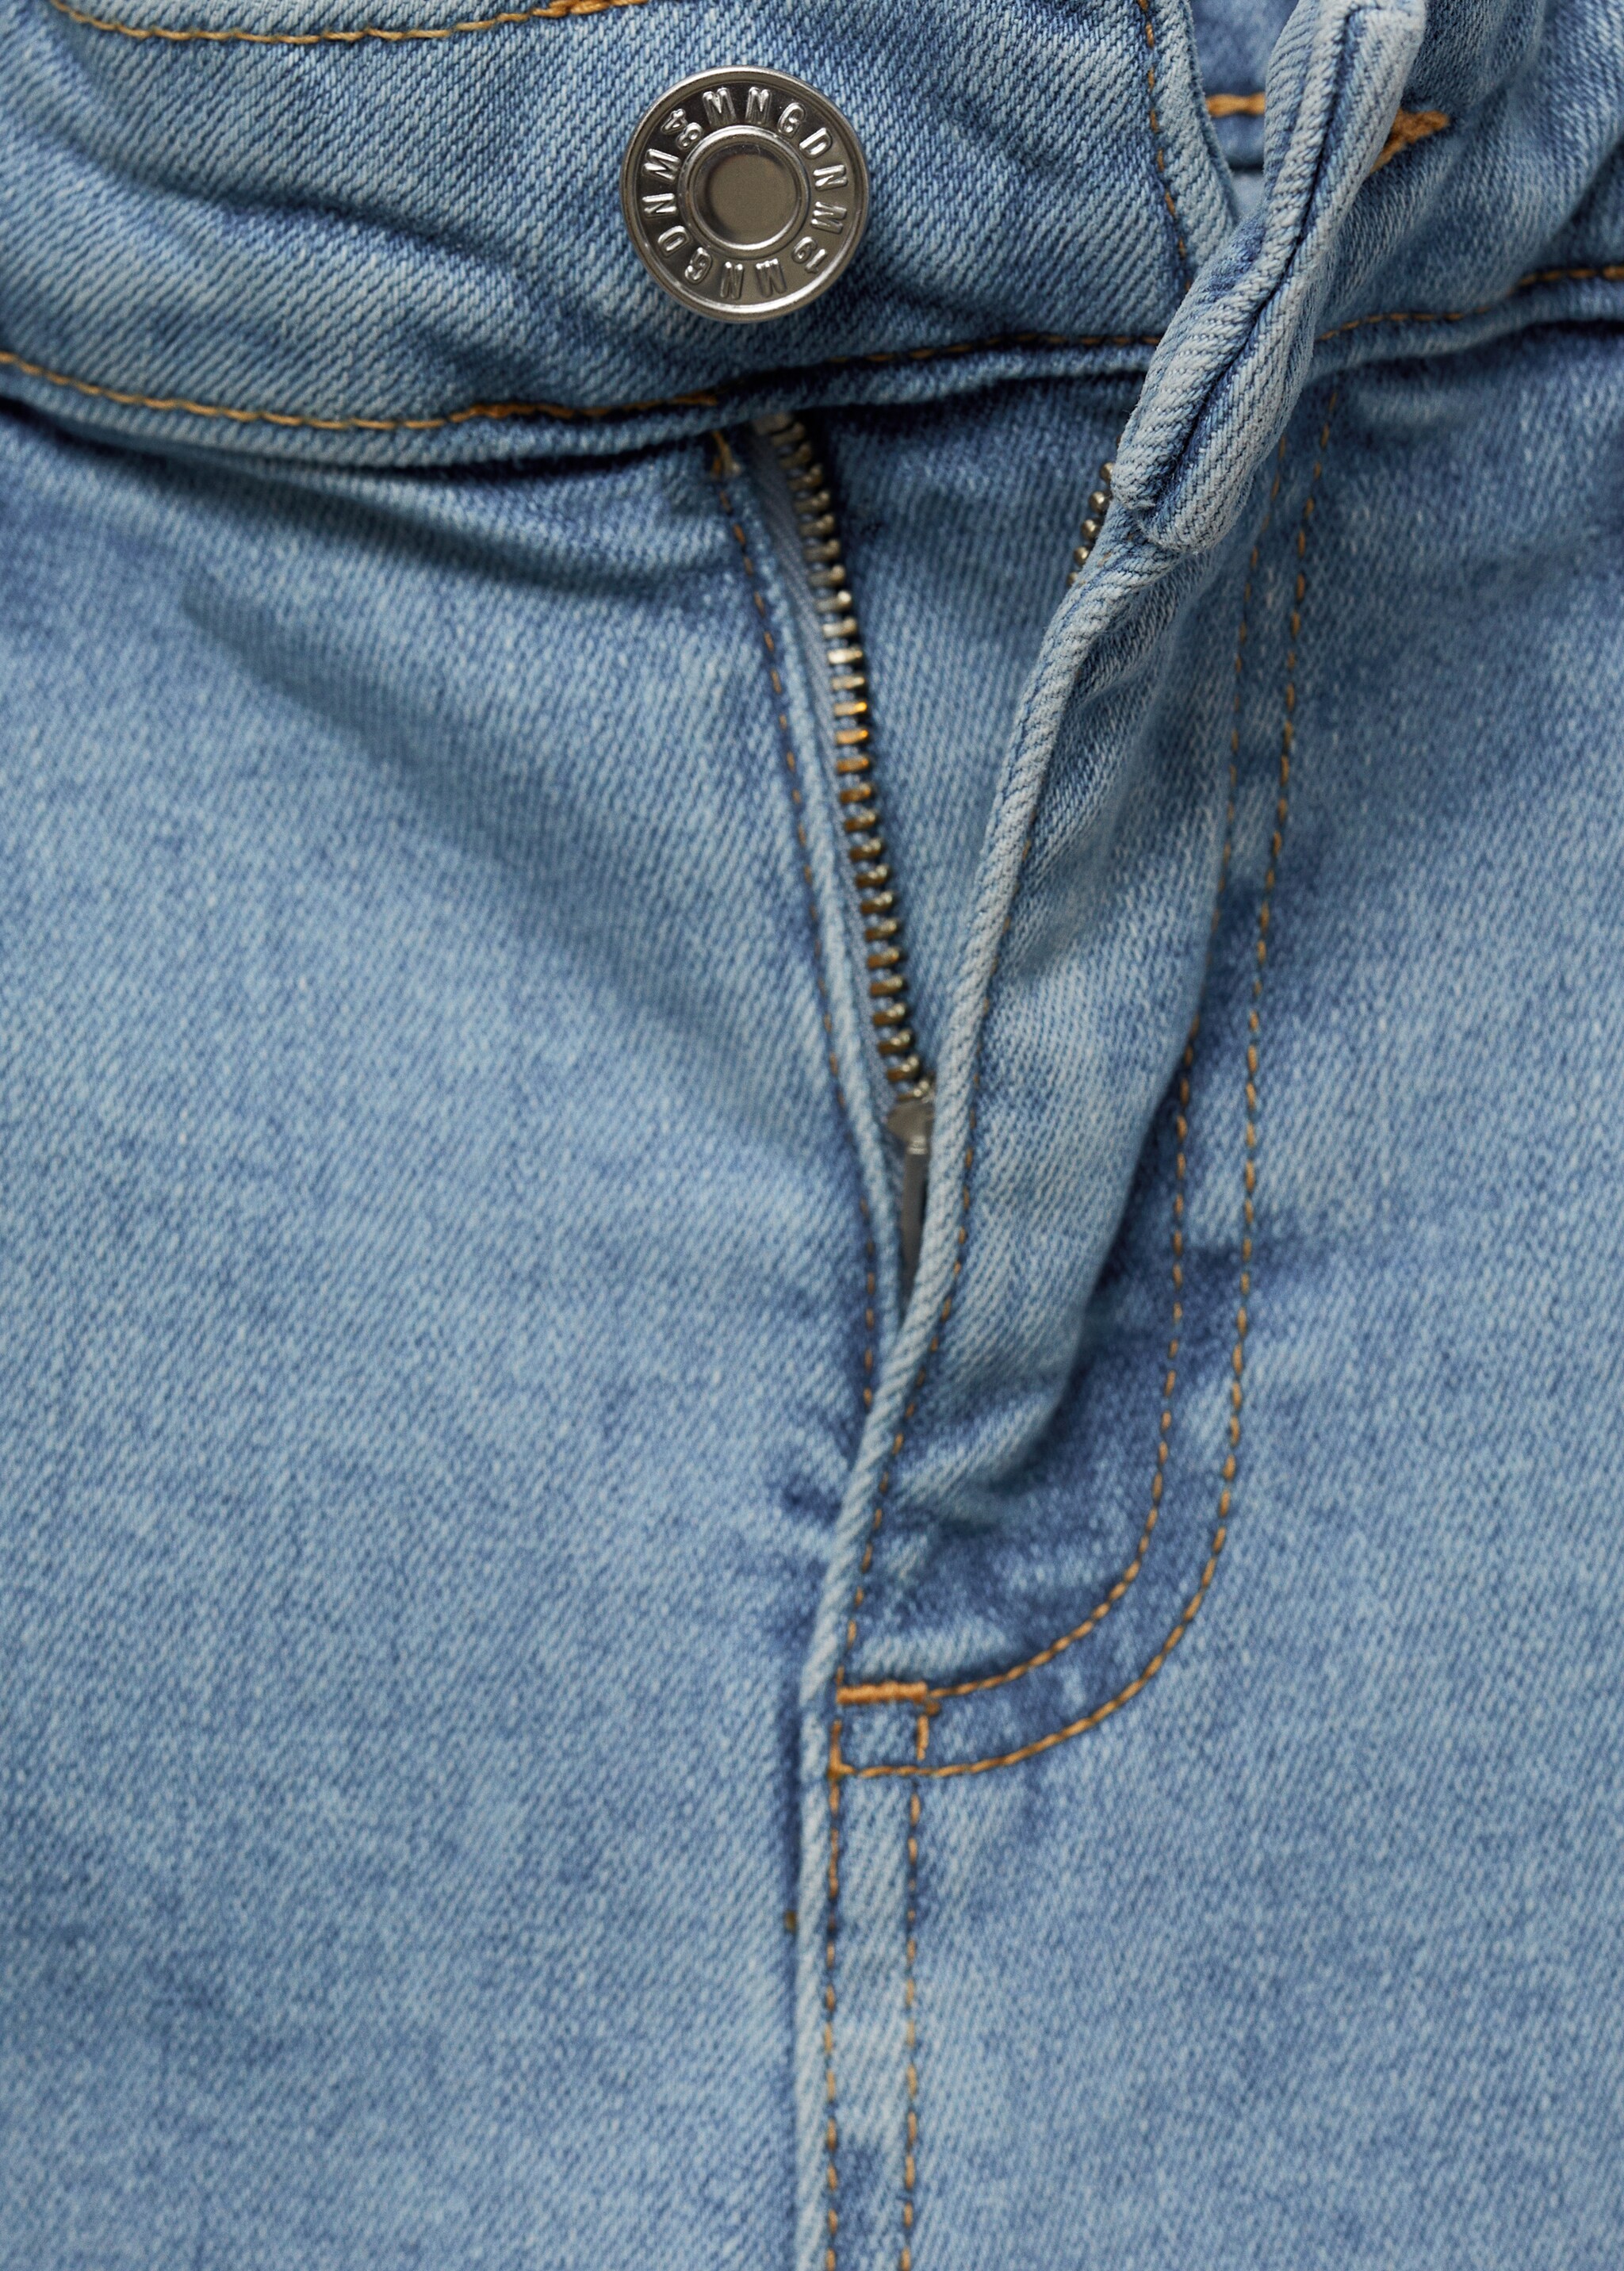 Slim capri jeans with decorative stitching - Деталь изделия 8